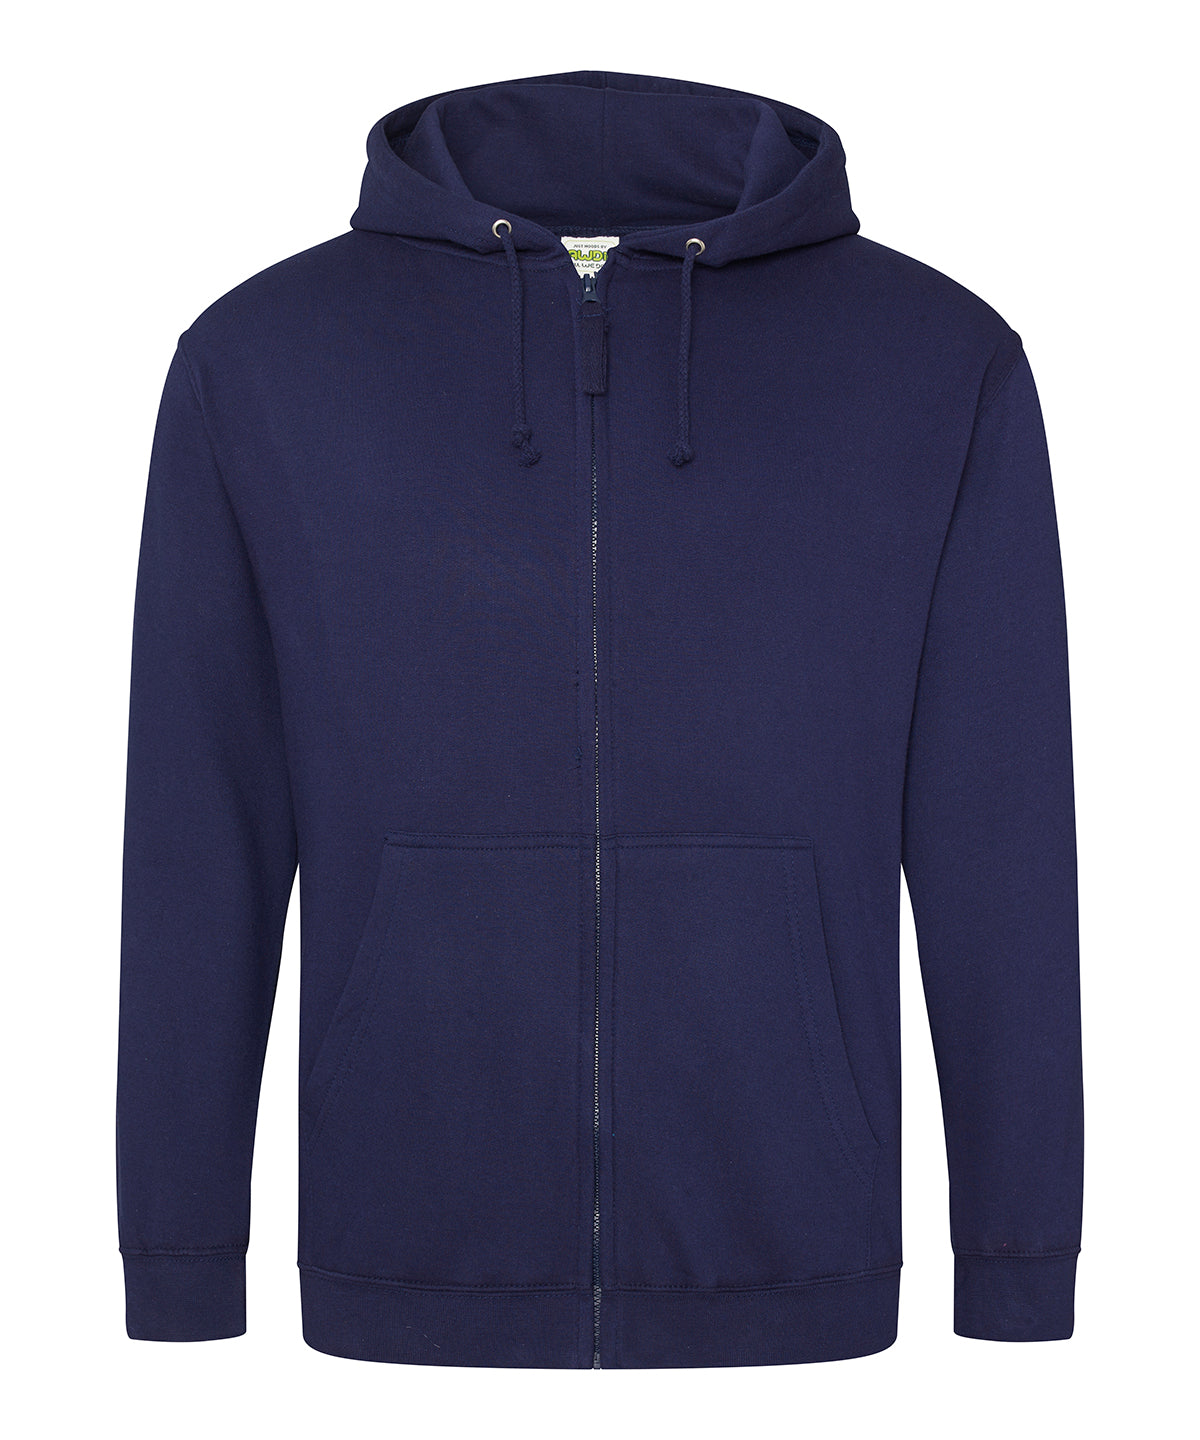 Just Hoods AWDis oxford navy zip-front men's hooded sweatshirt hoodie #JH050